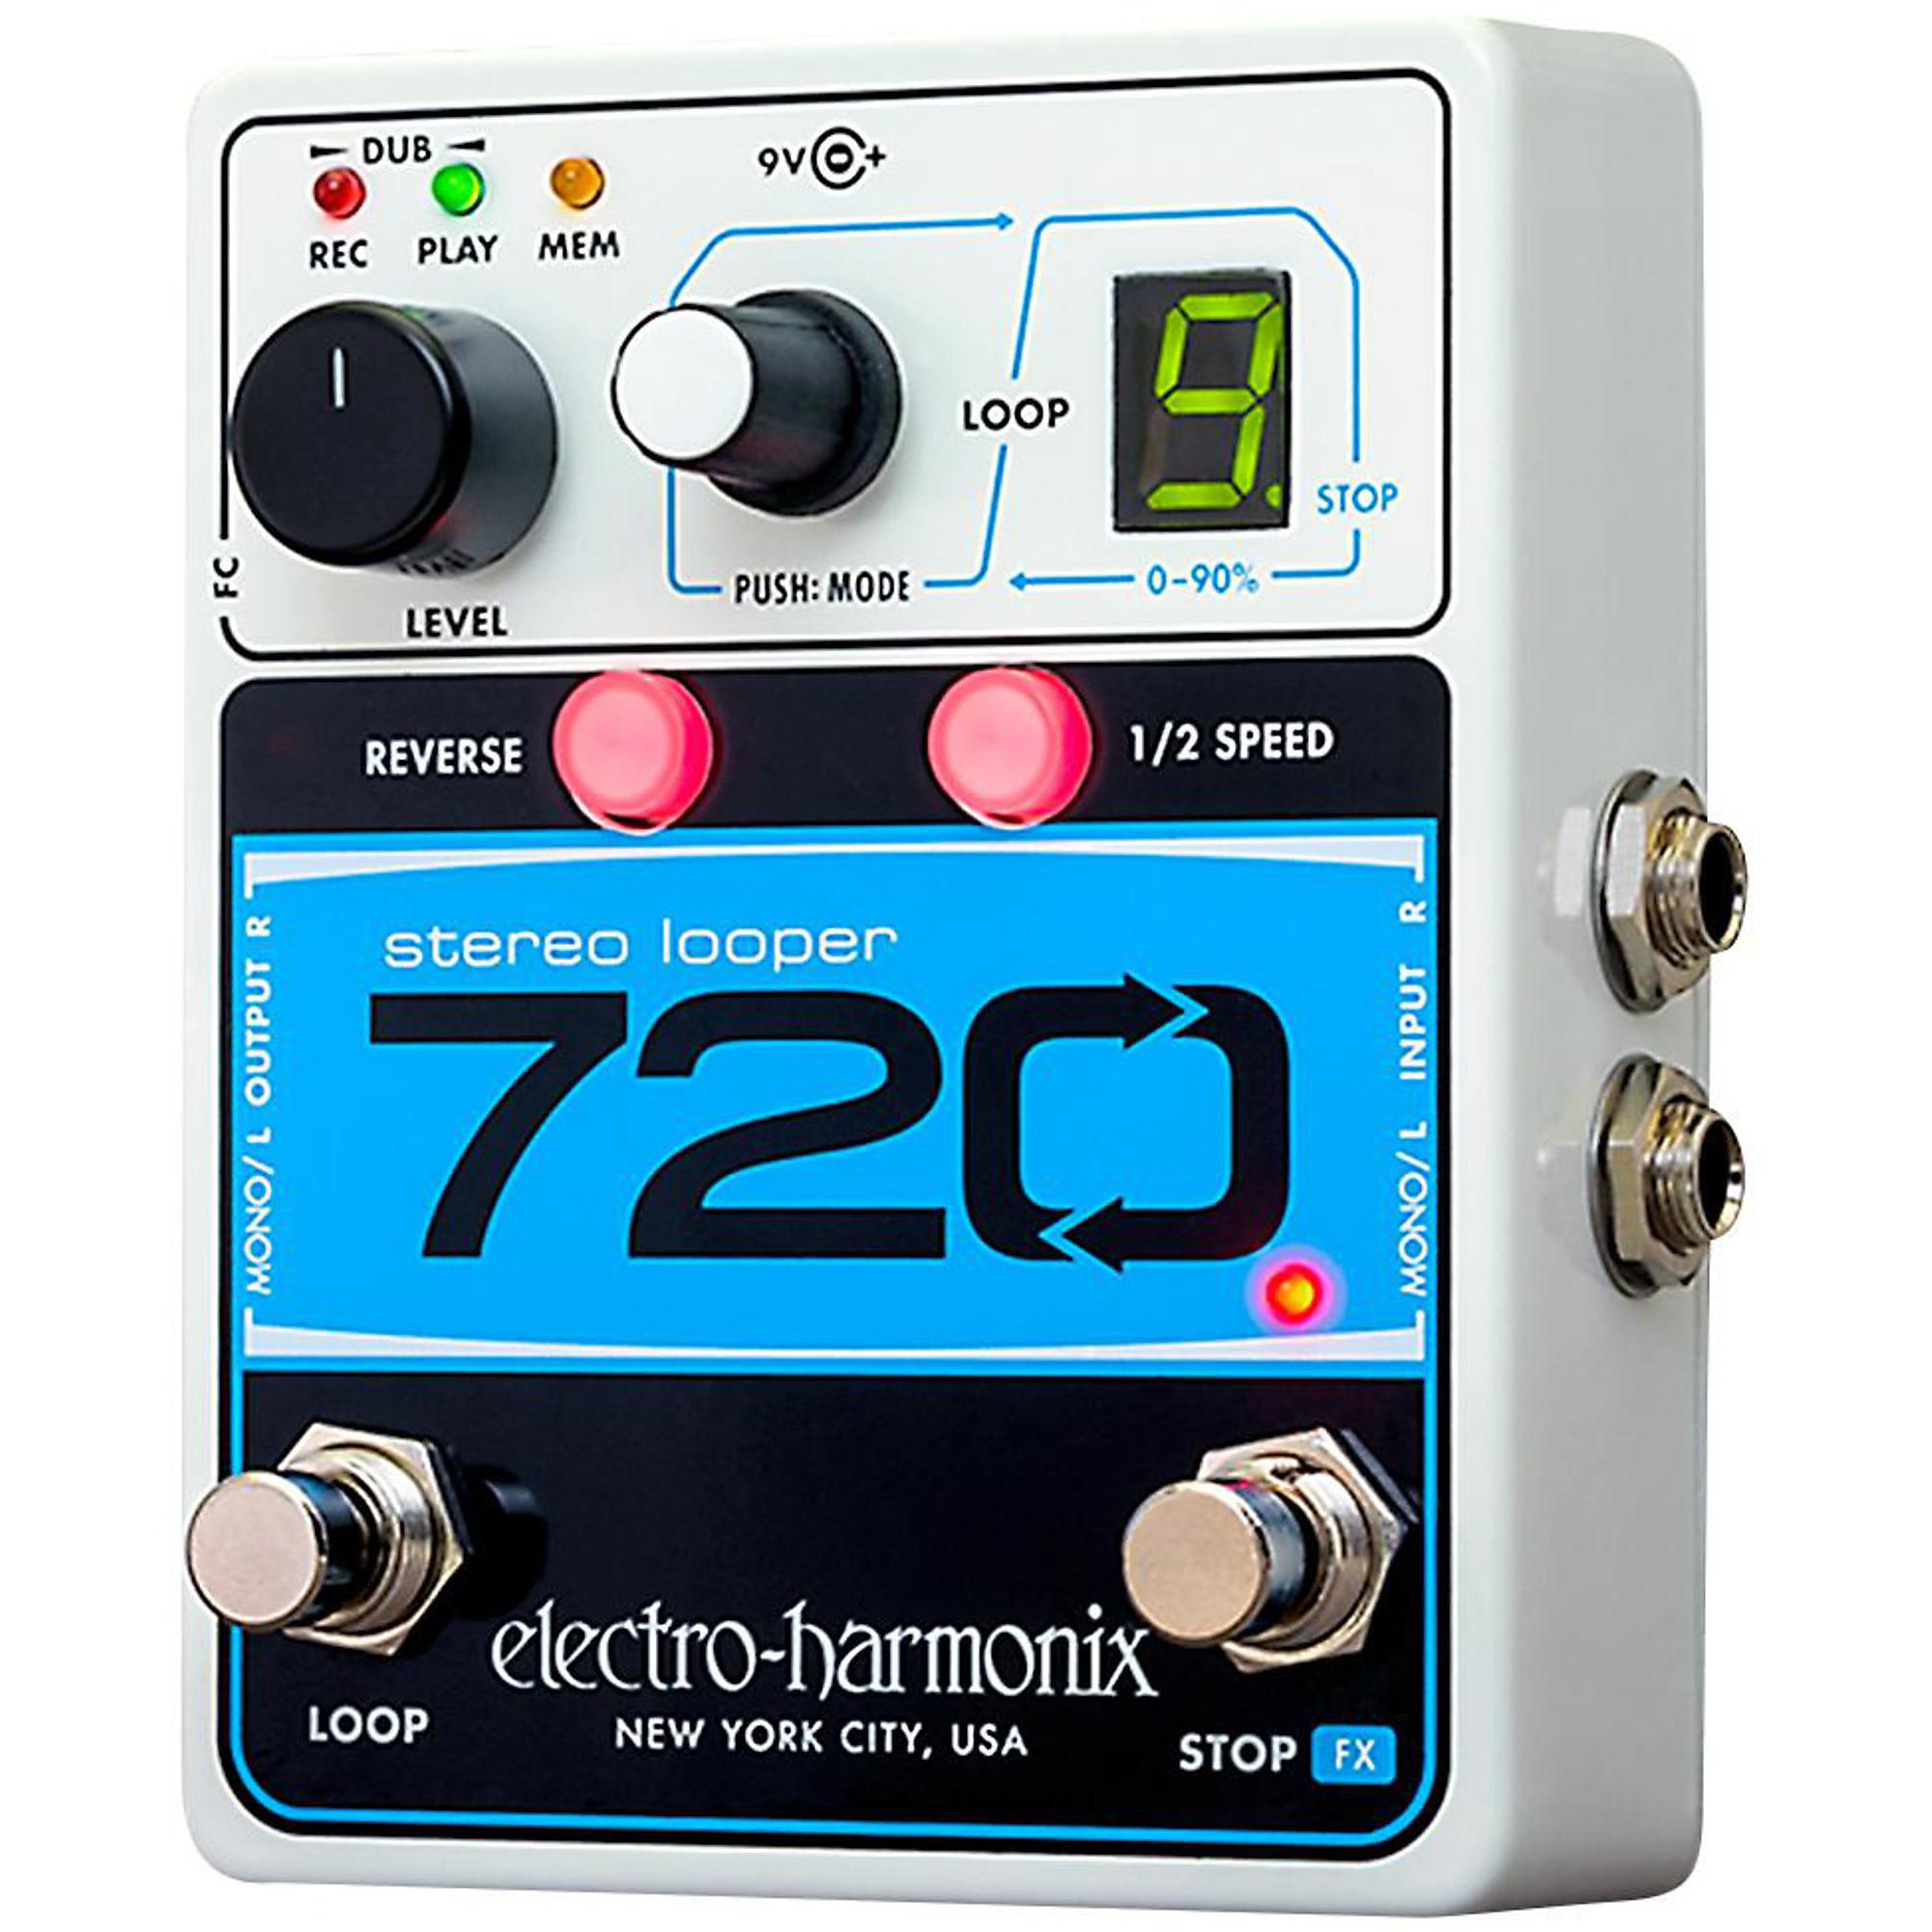 Electro-Harmonix EHX 720 stereo Looper. Looper. Rec Play Dub stop. STLOOP. Dub player